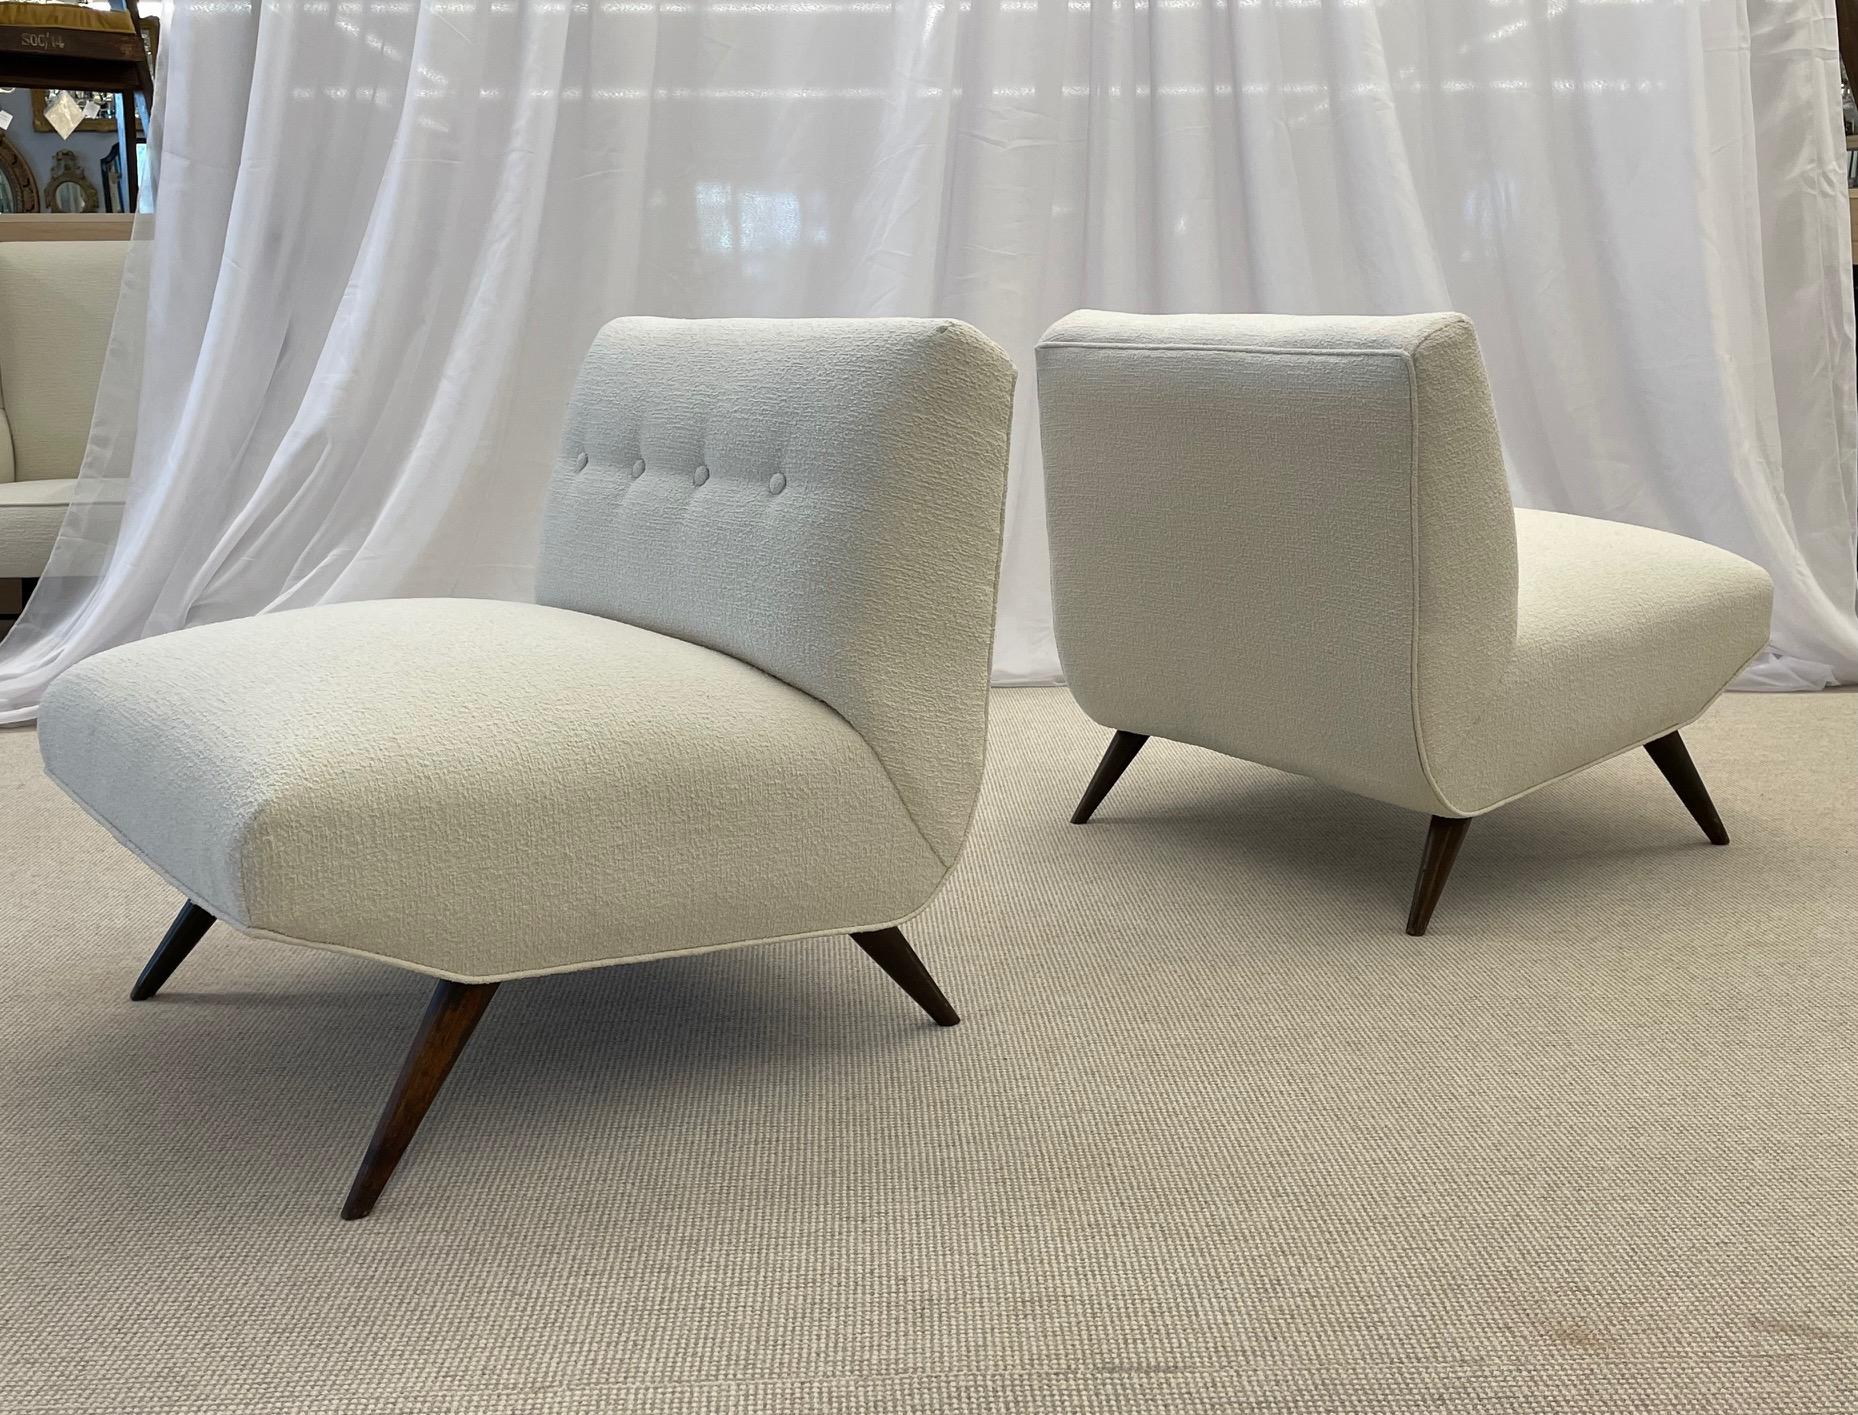 Pair of American Mid-Century Modern style slipper chairs, Paul McCobb, Kravet Bouclé having a sprayed walnut leg.